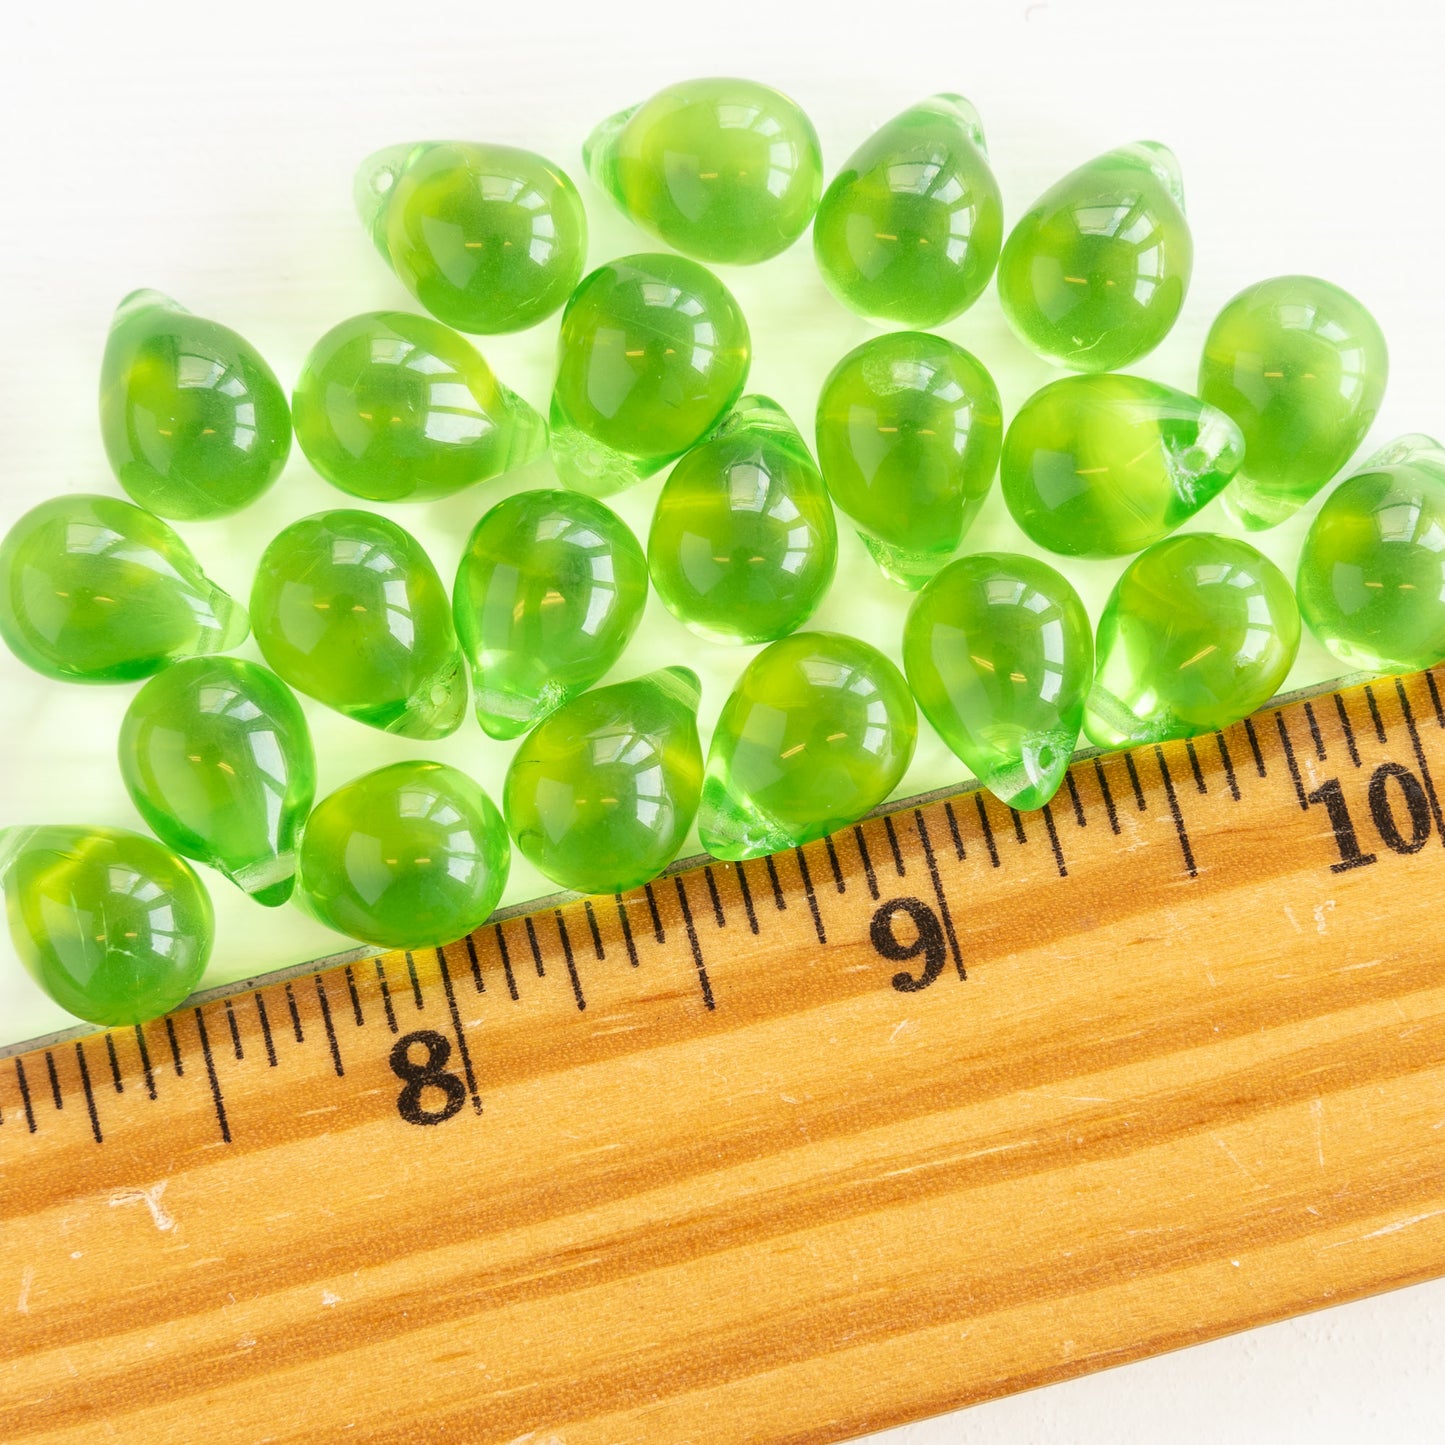 10x14mm Glass Teardrop Beads - Lt. Lime Green